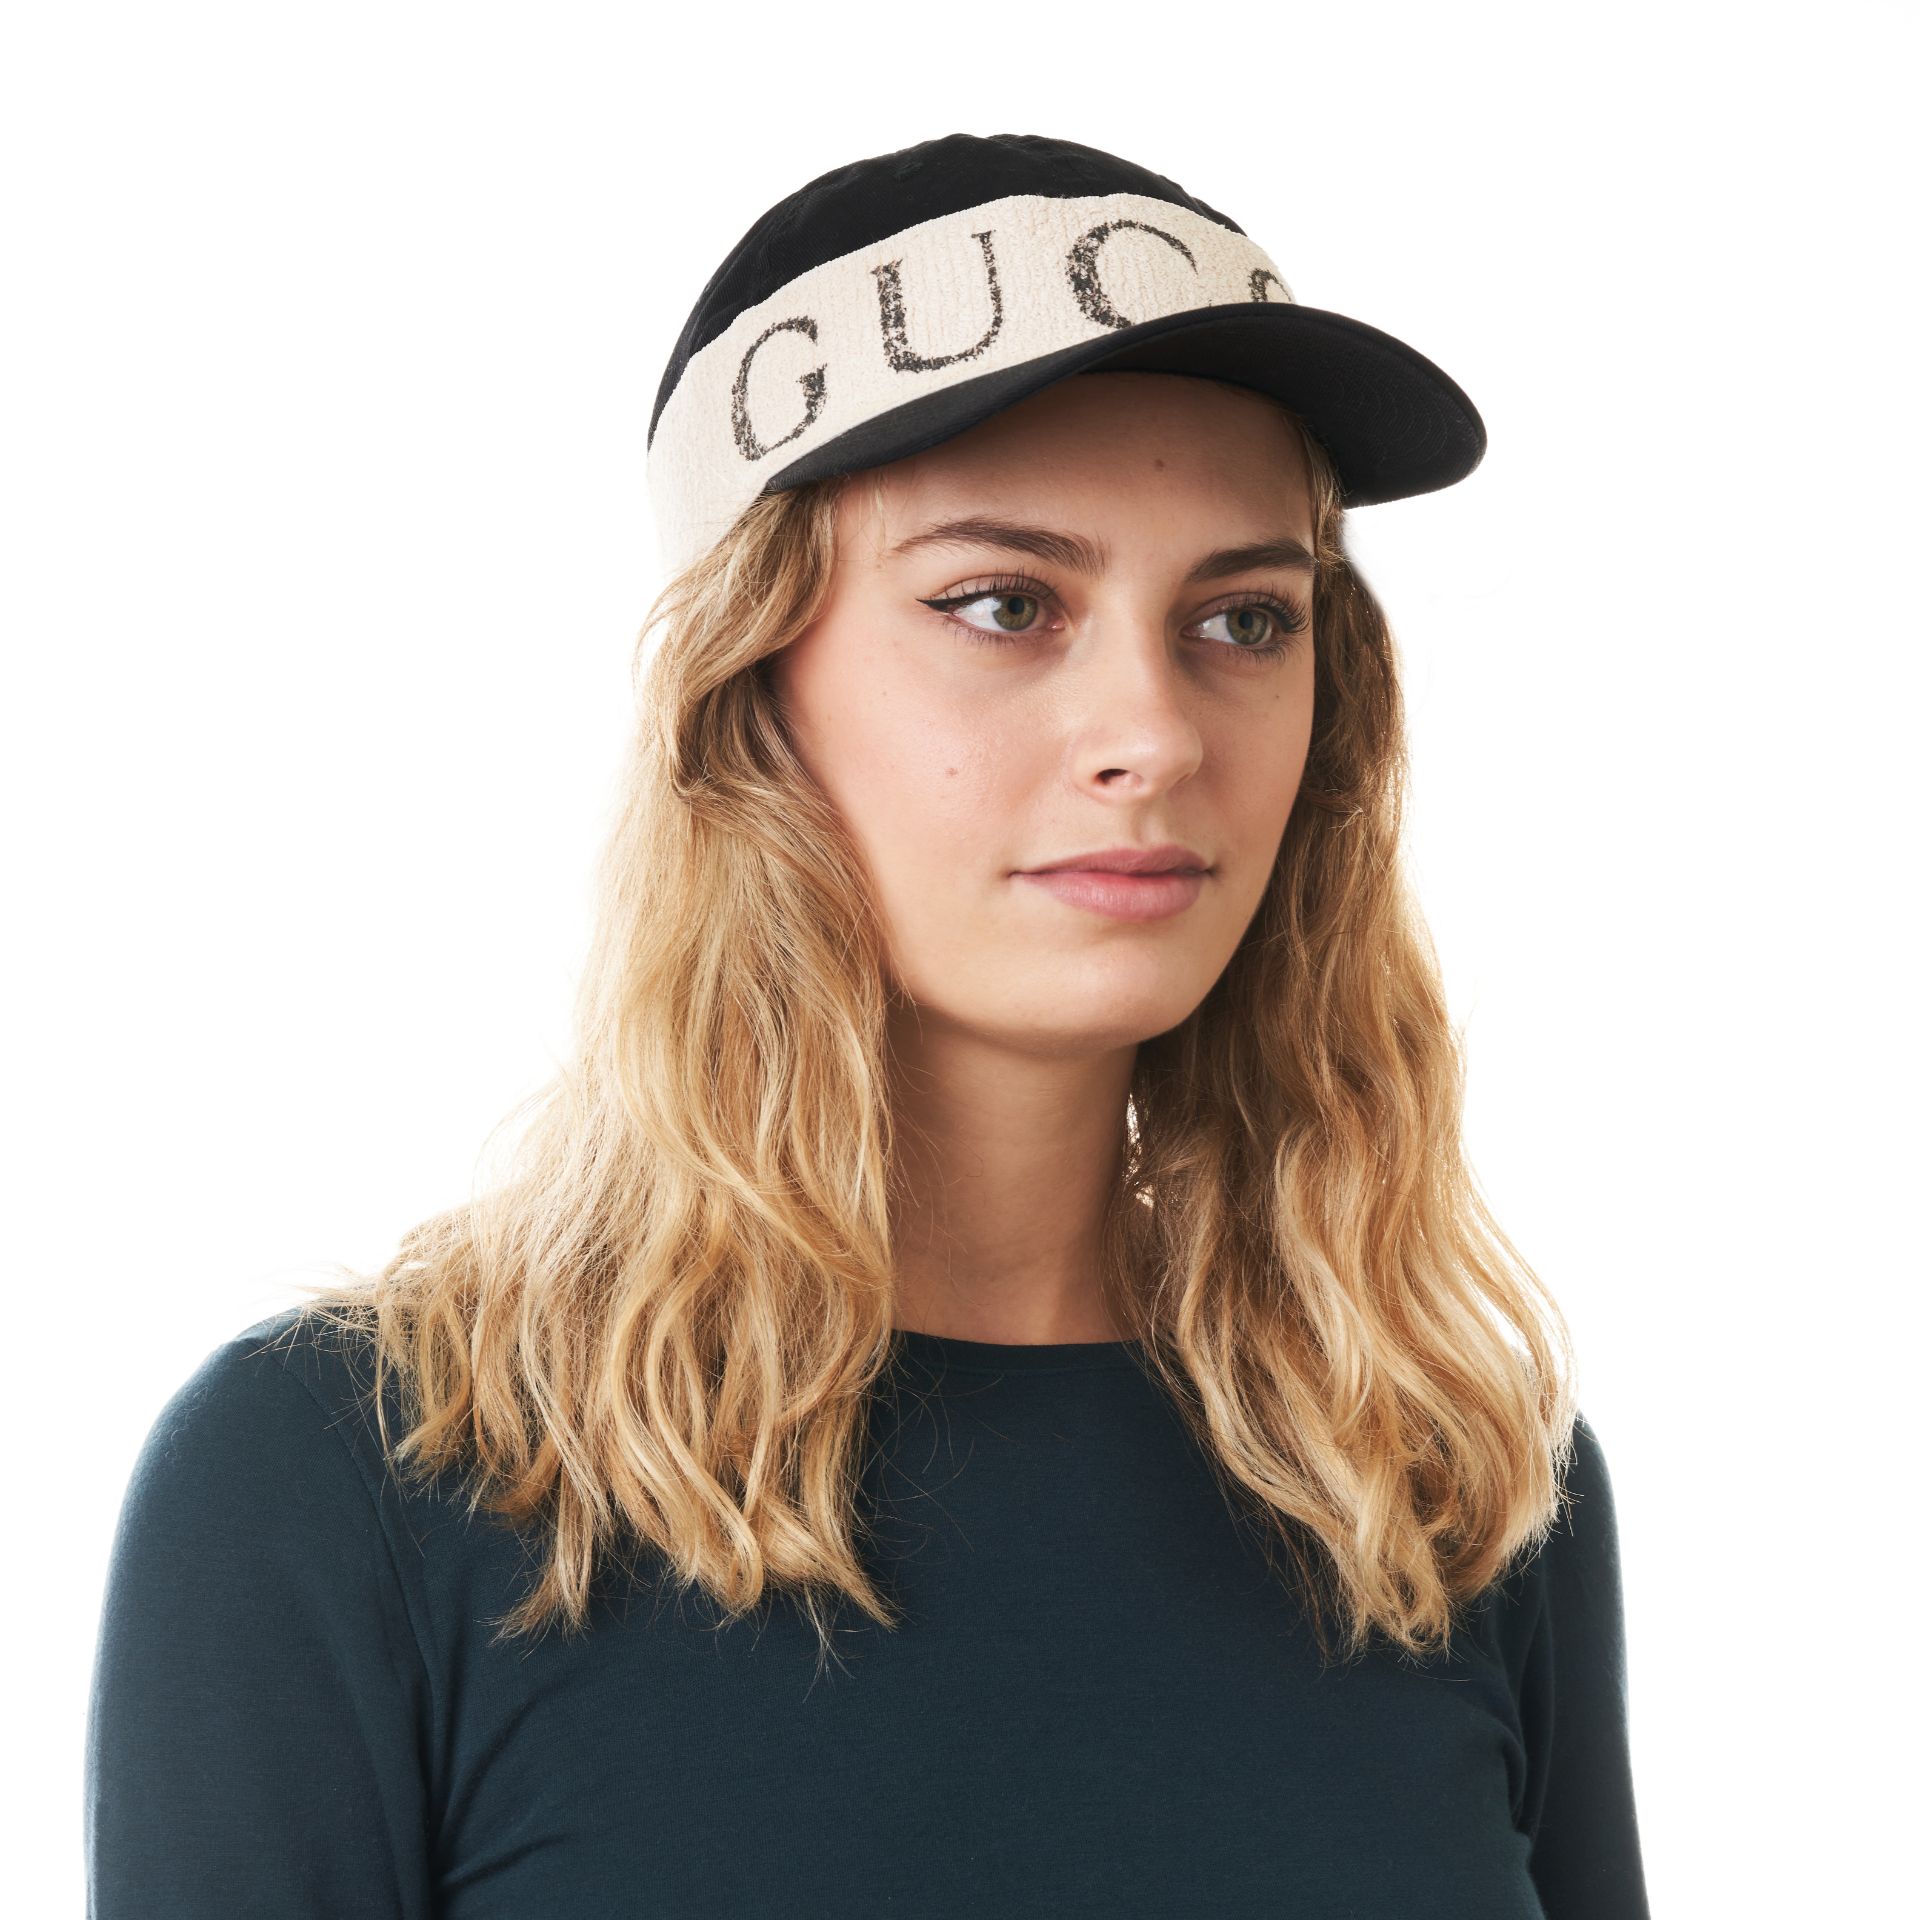 GUCCI LOGO BASEBALL HAT Size L, 59. Black fabric baseball cap with ivory toned 'Gucci' logo deta...